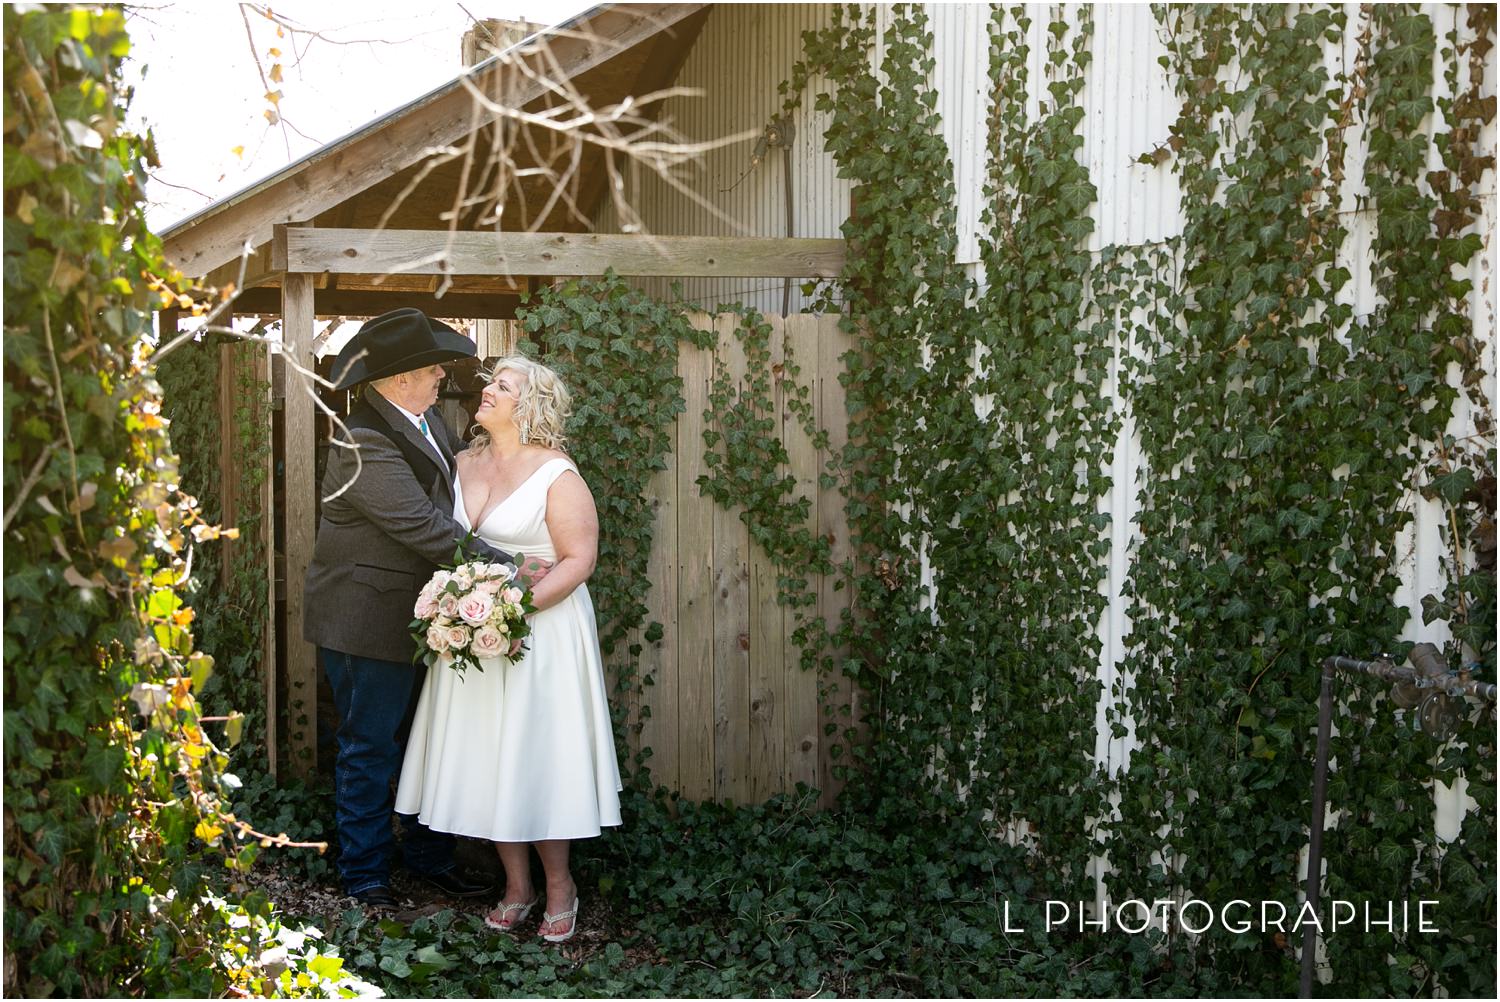 L Photographie St. Louis wedding photography Cedar Creek Lodge_0005.jpg